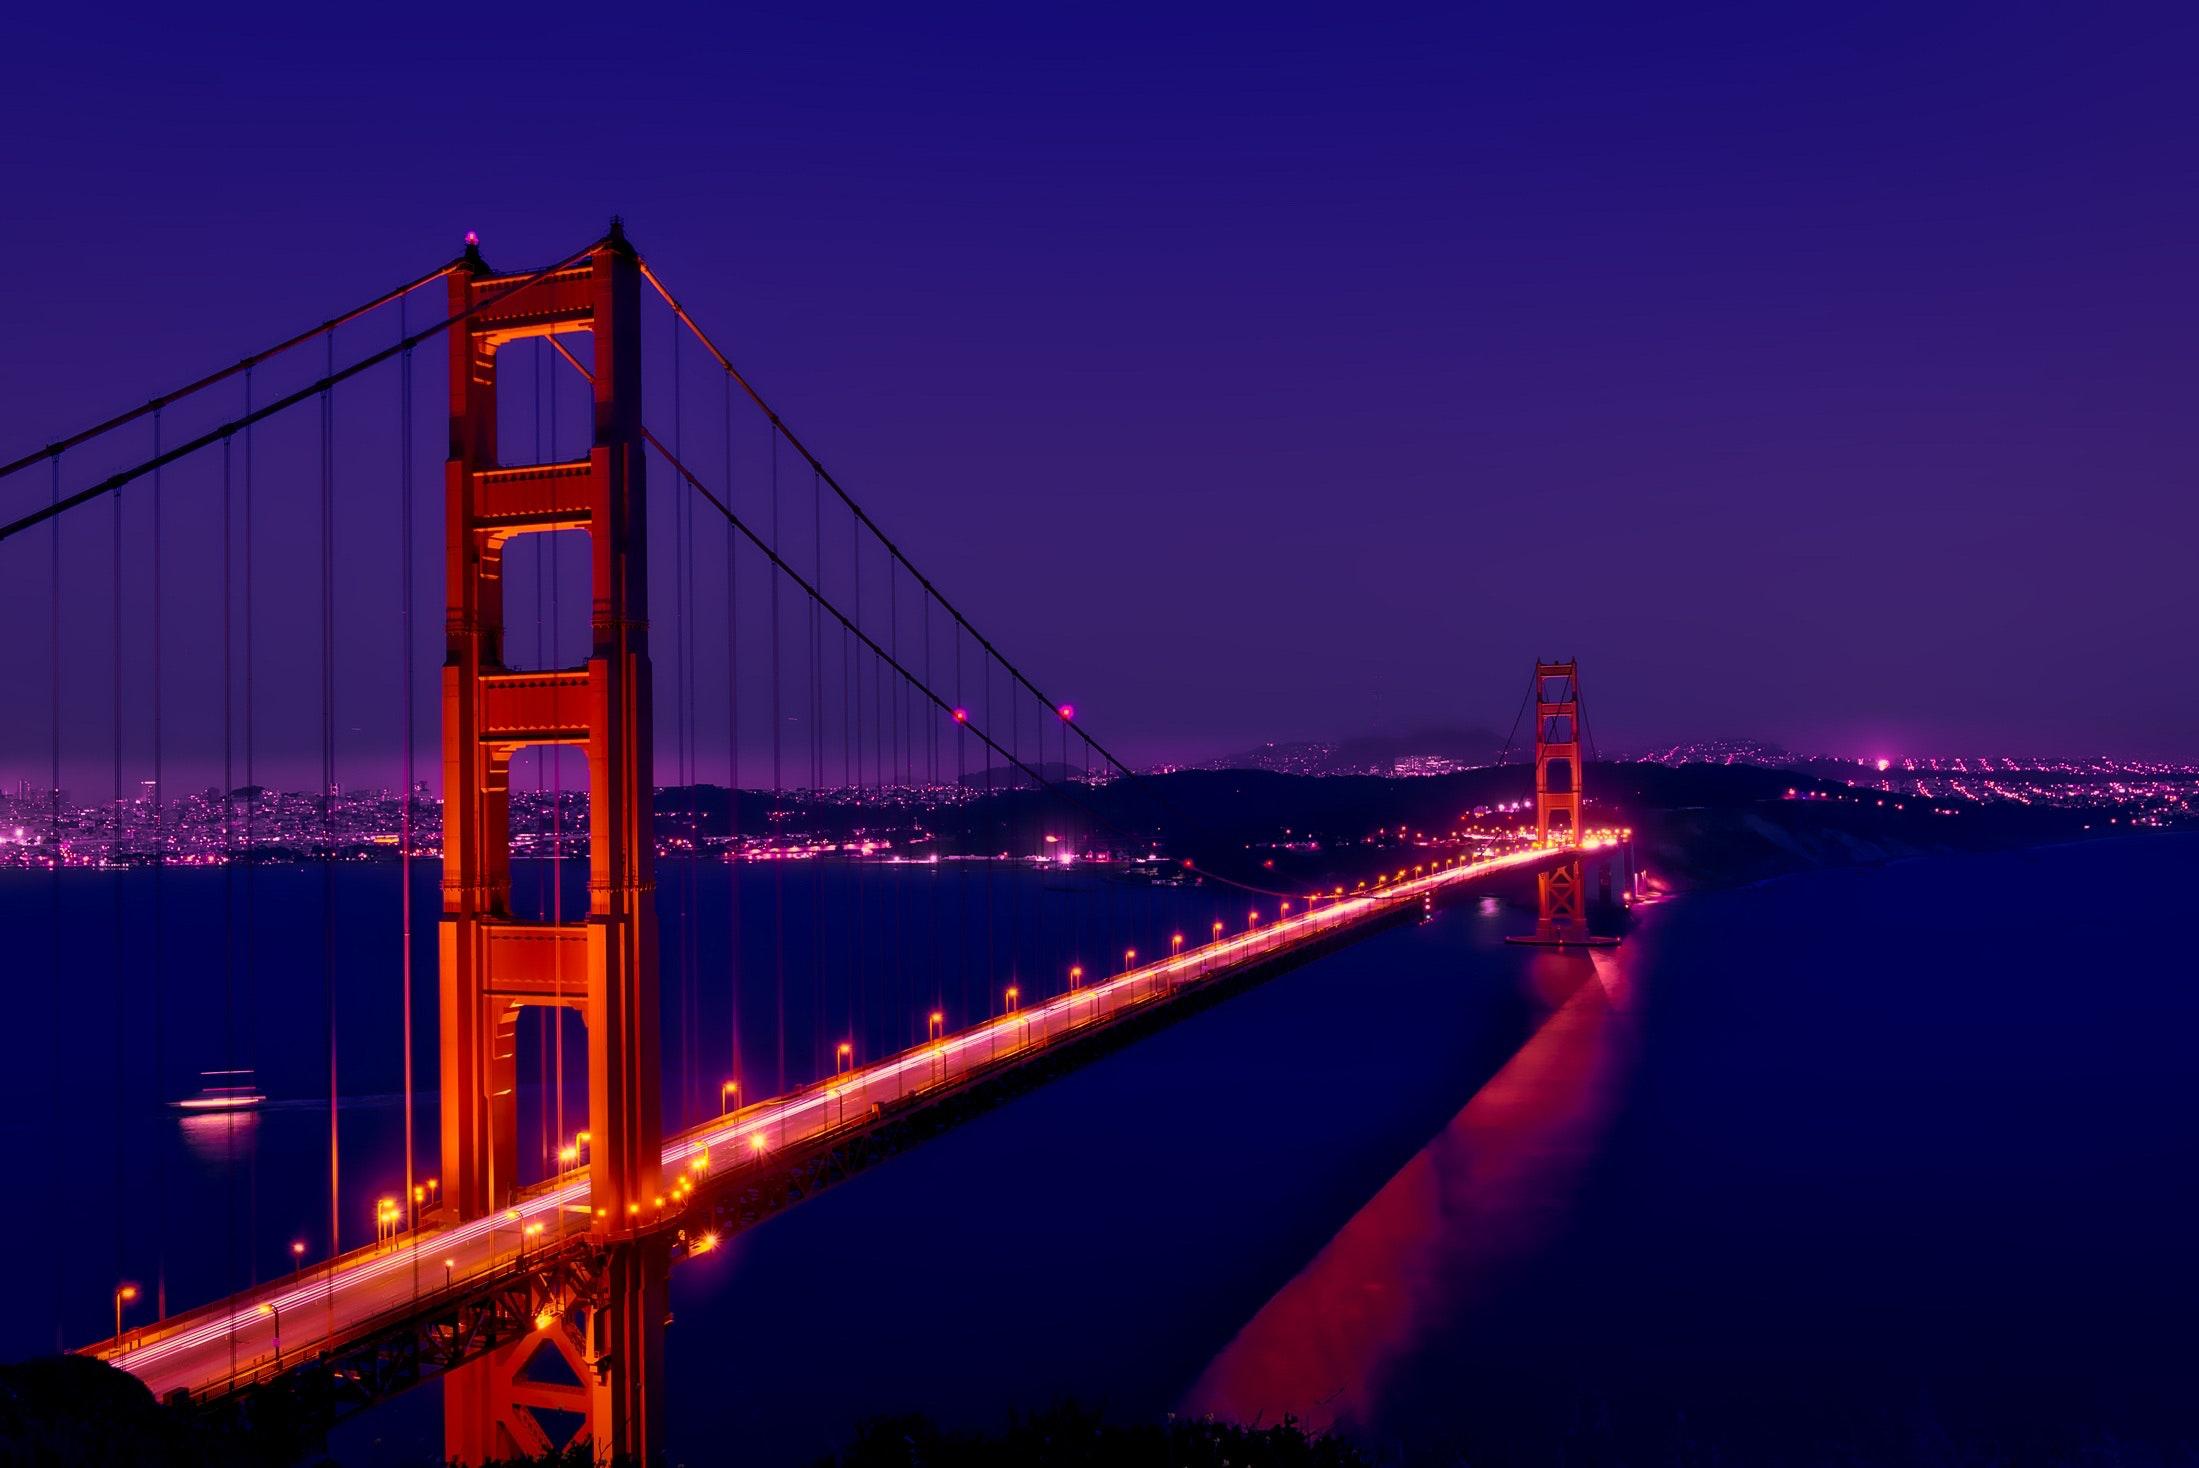 Golden Gate Bridge At Night Wallpapers Wallpaper Cave